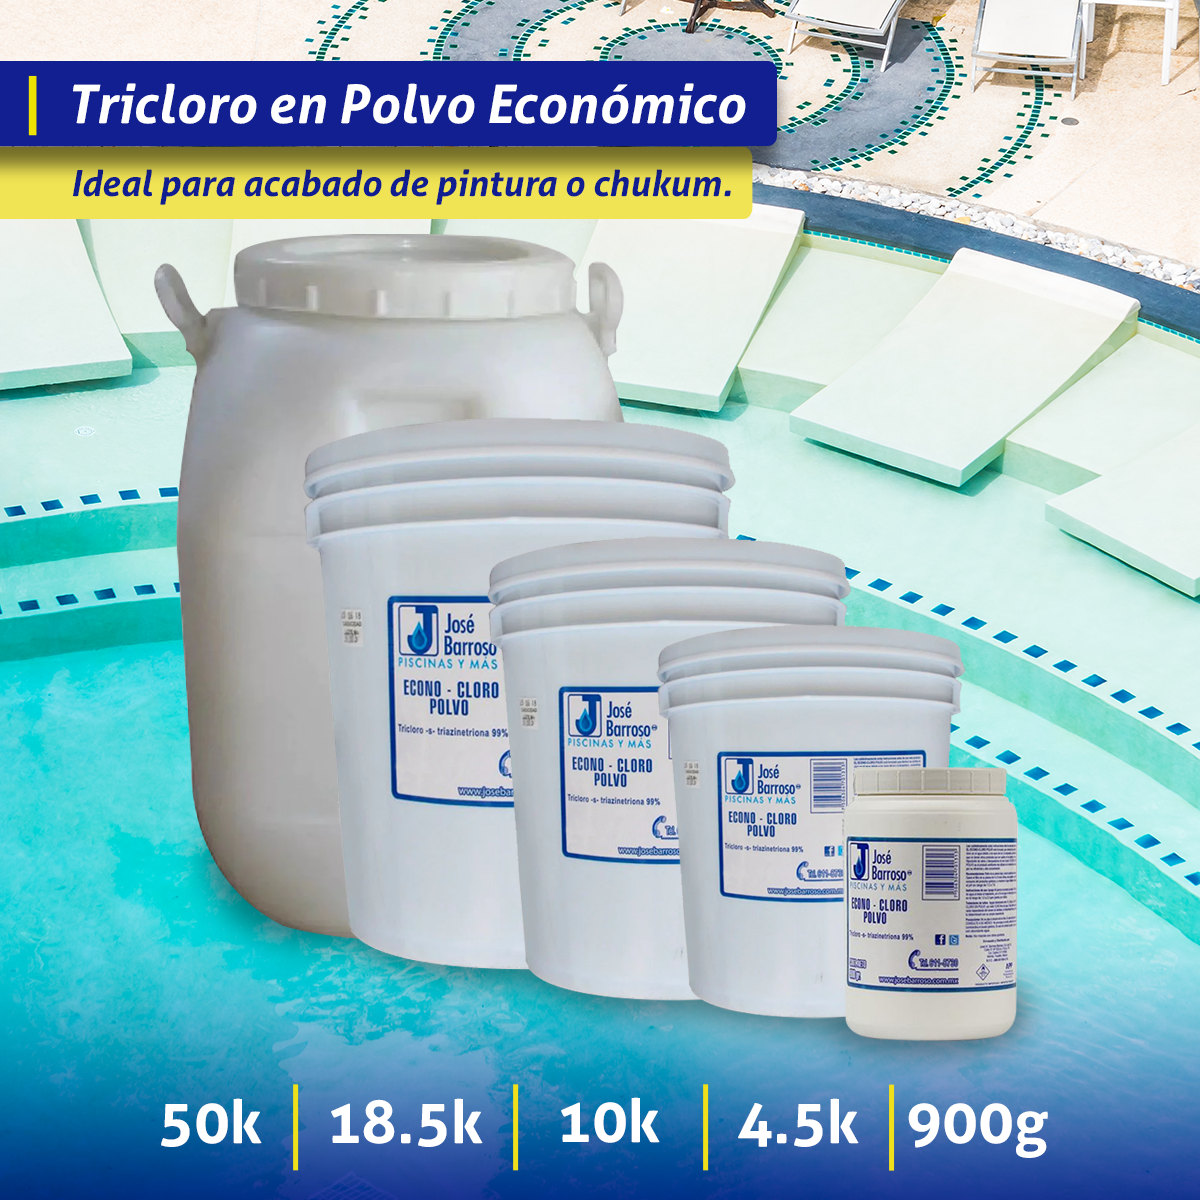 Tricloro en Polvo 4.5kg alberca / piscina - Línea Económica!